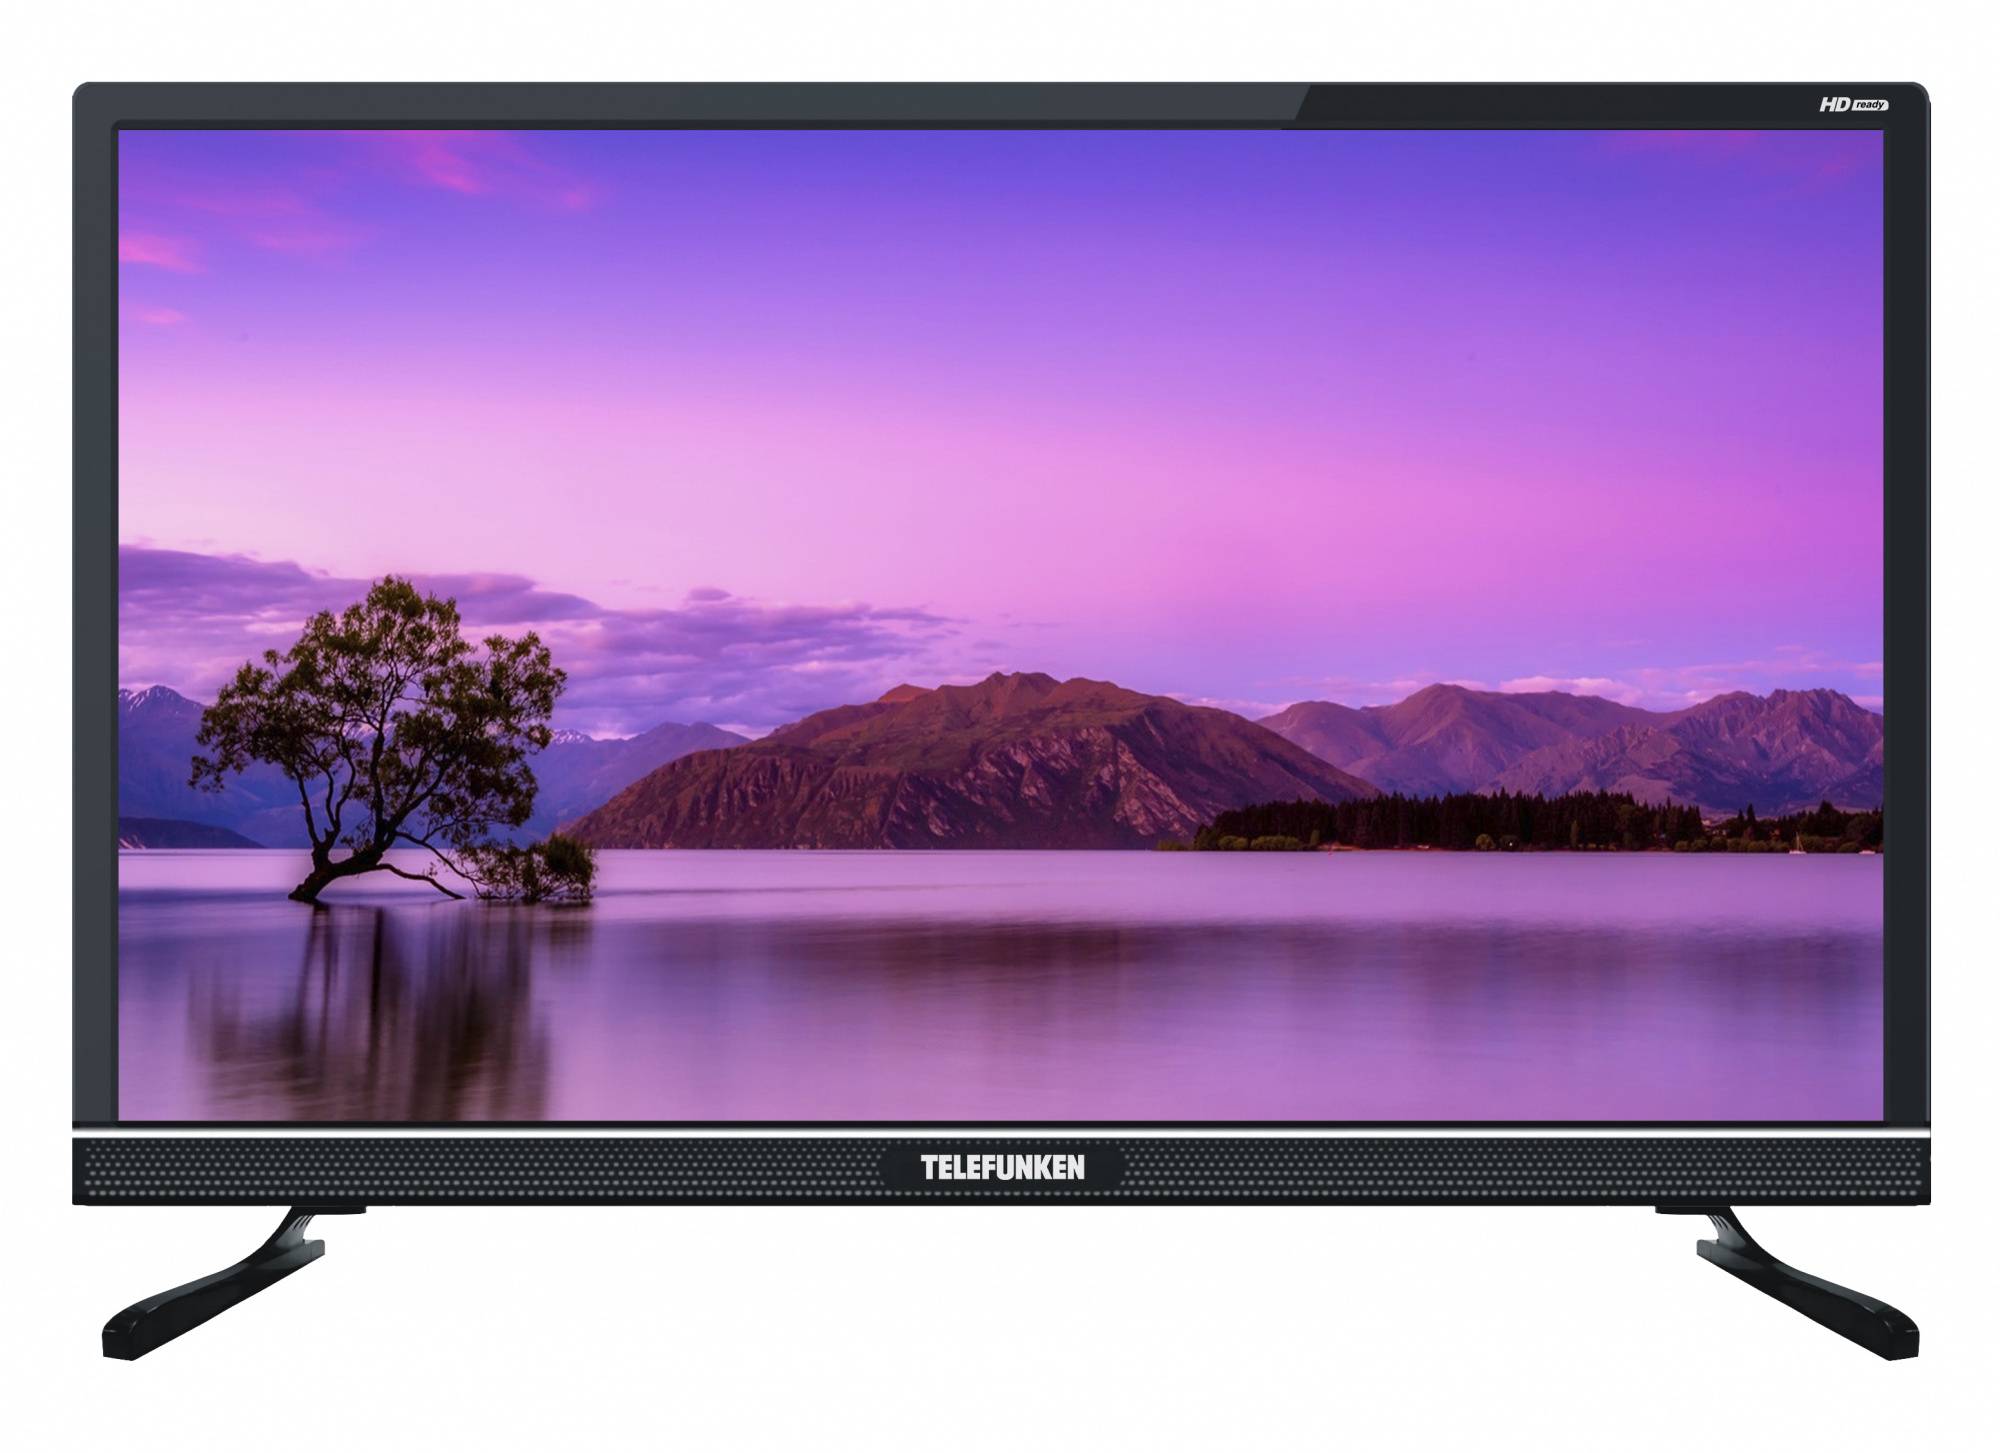 Телевизор Telefunken TF-LED24S84T2S(черный)\H, 23.6", LED, HD, Android, черный